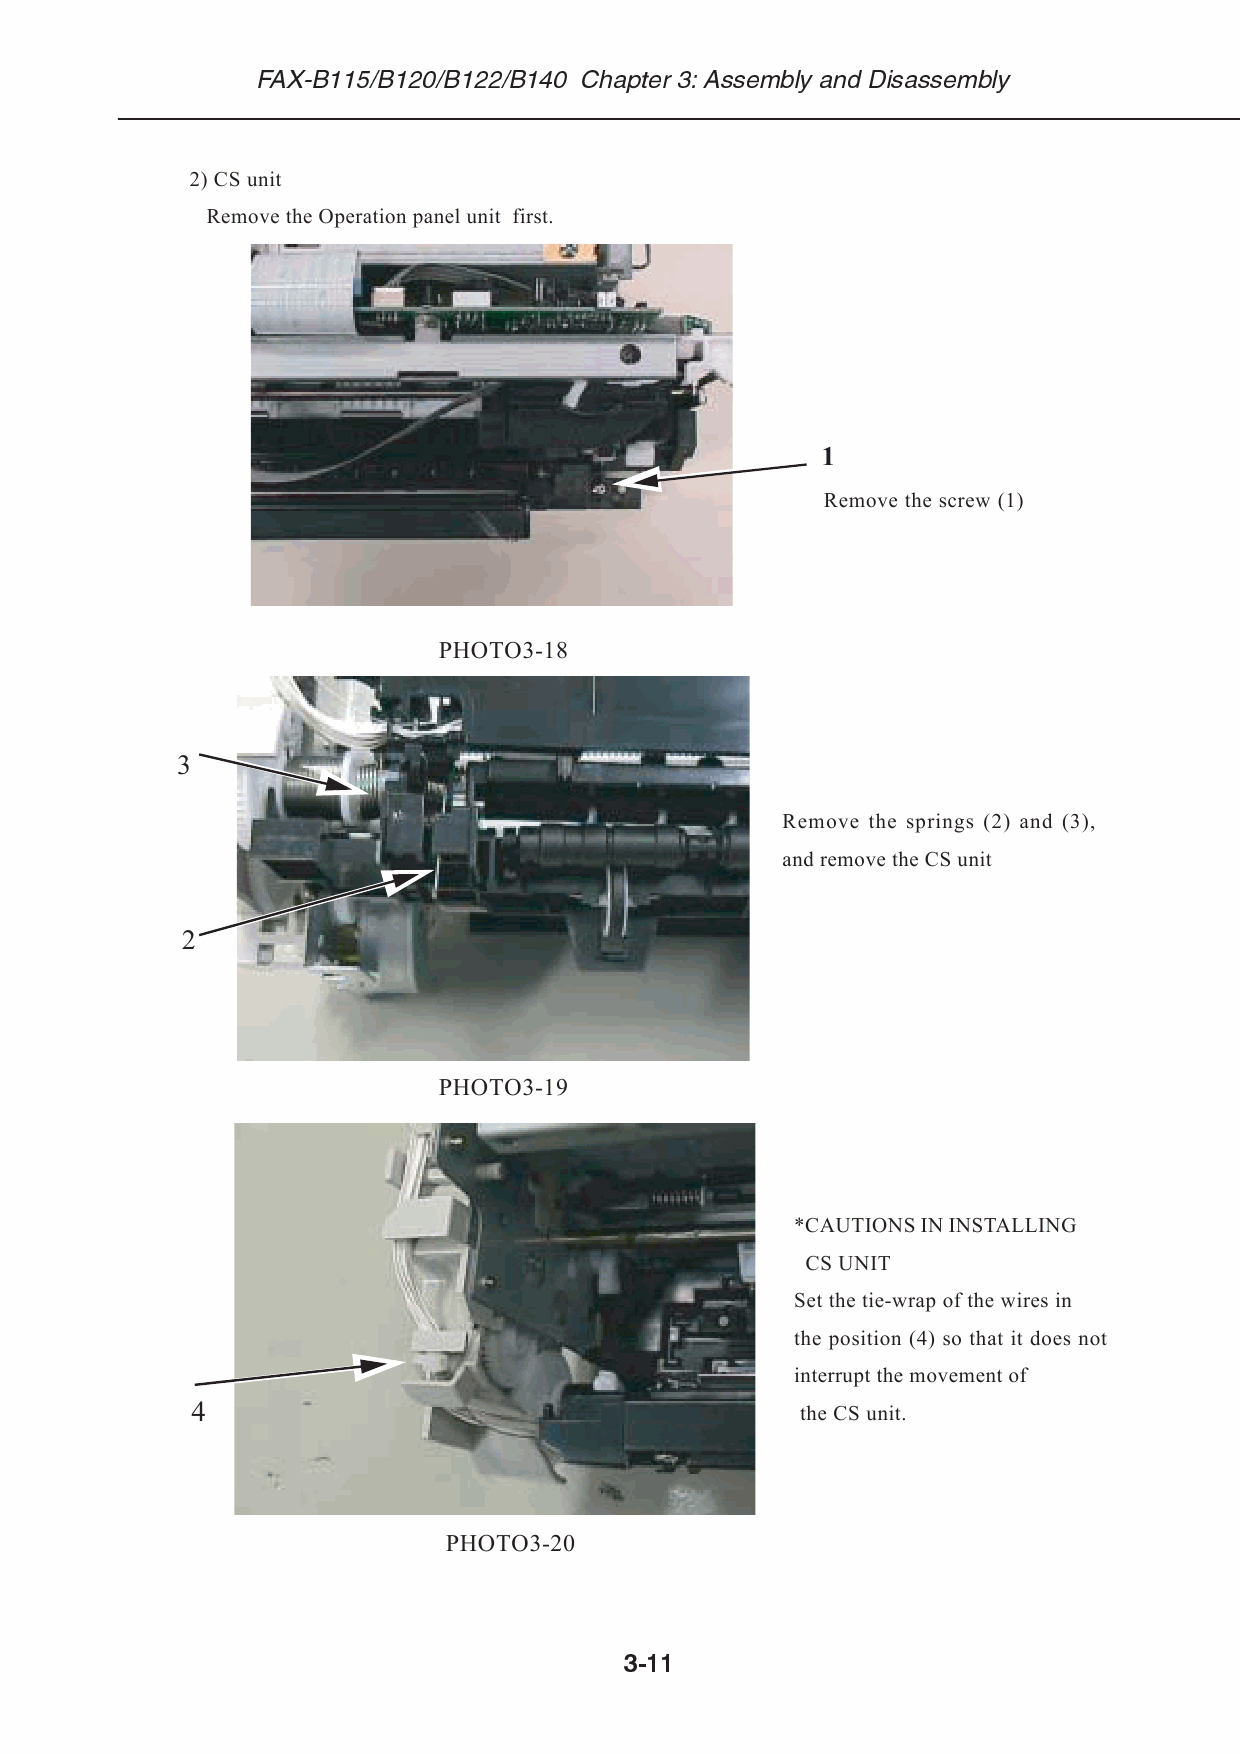 Canon FAX B115 B120 B122 B140 Service Manual-4